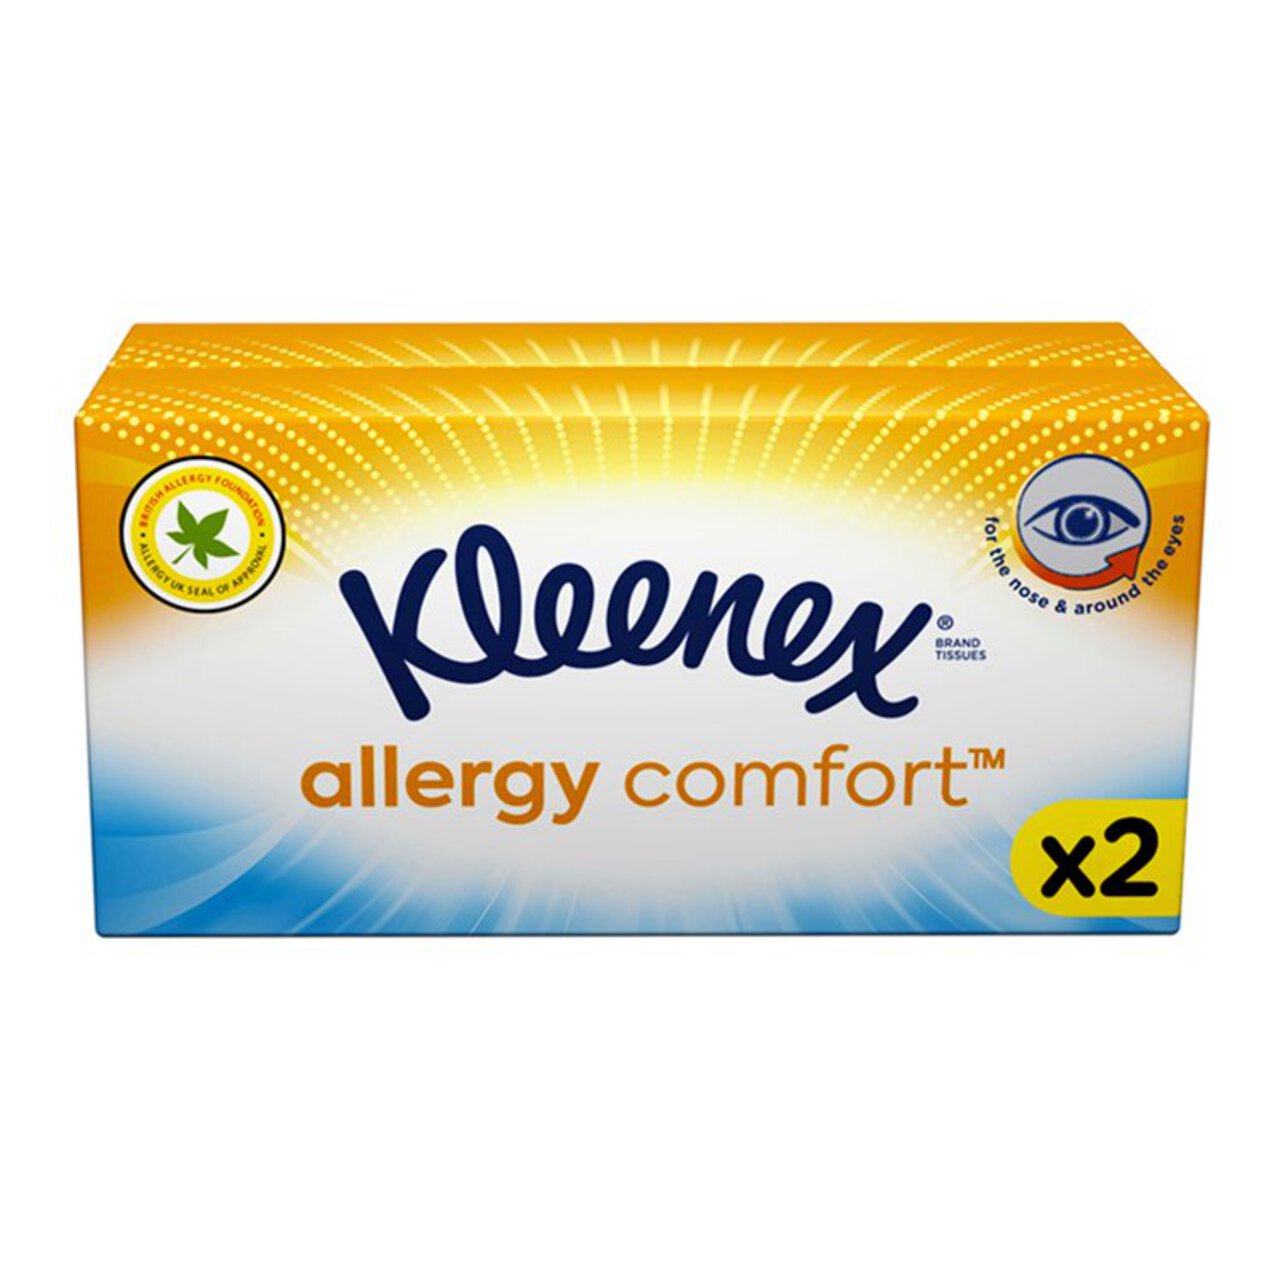 Kleenex Hayfever Allergy Comfort Facial Tissues - Twin Box 2 per pack